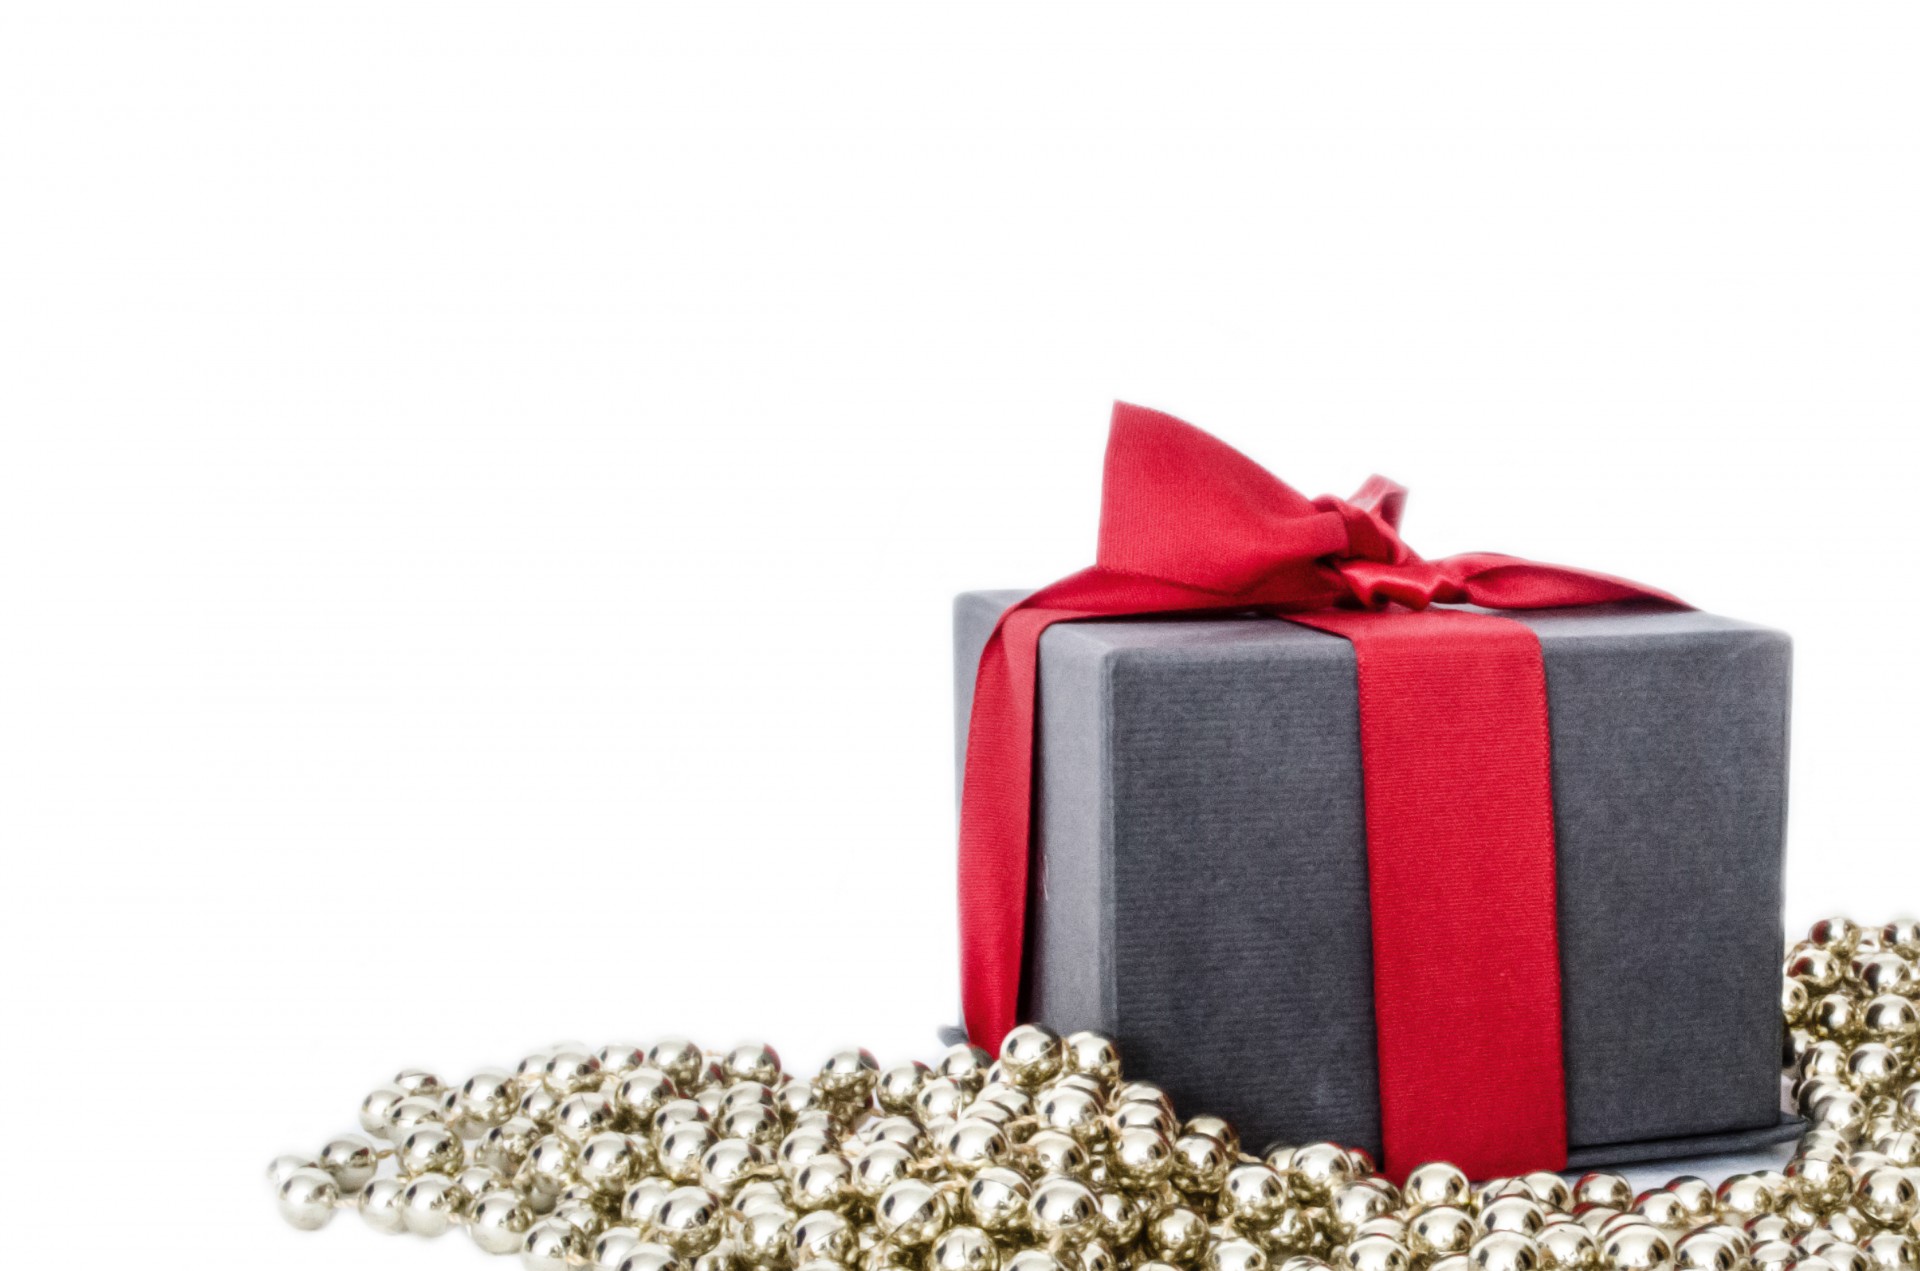 1. Christmas2. Budget-friendly3. Festive4. Gift Ideas5. DIY